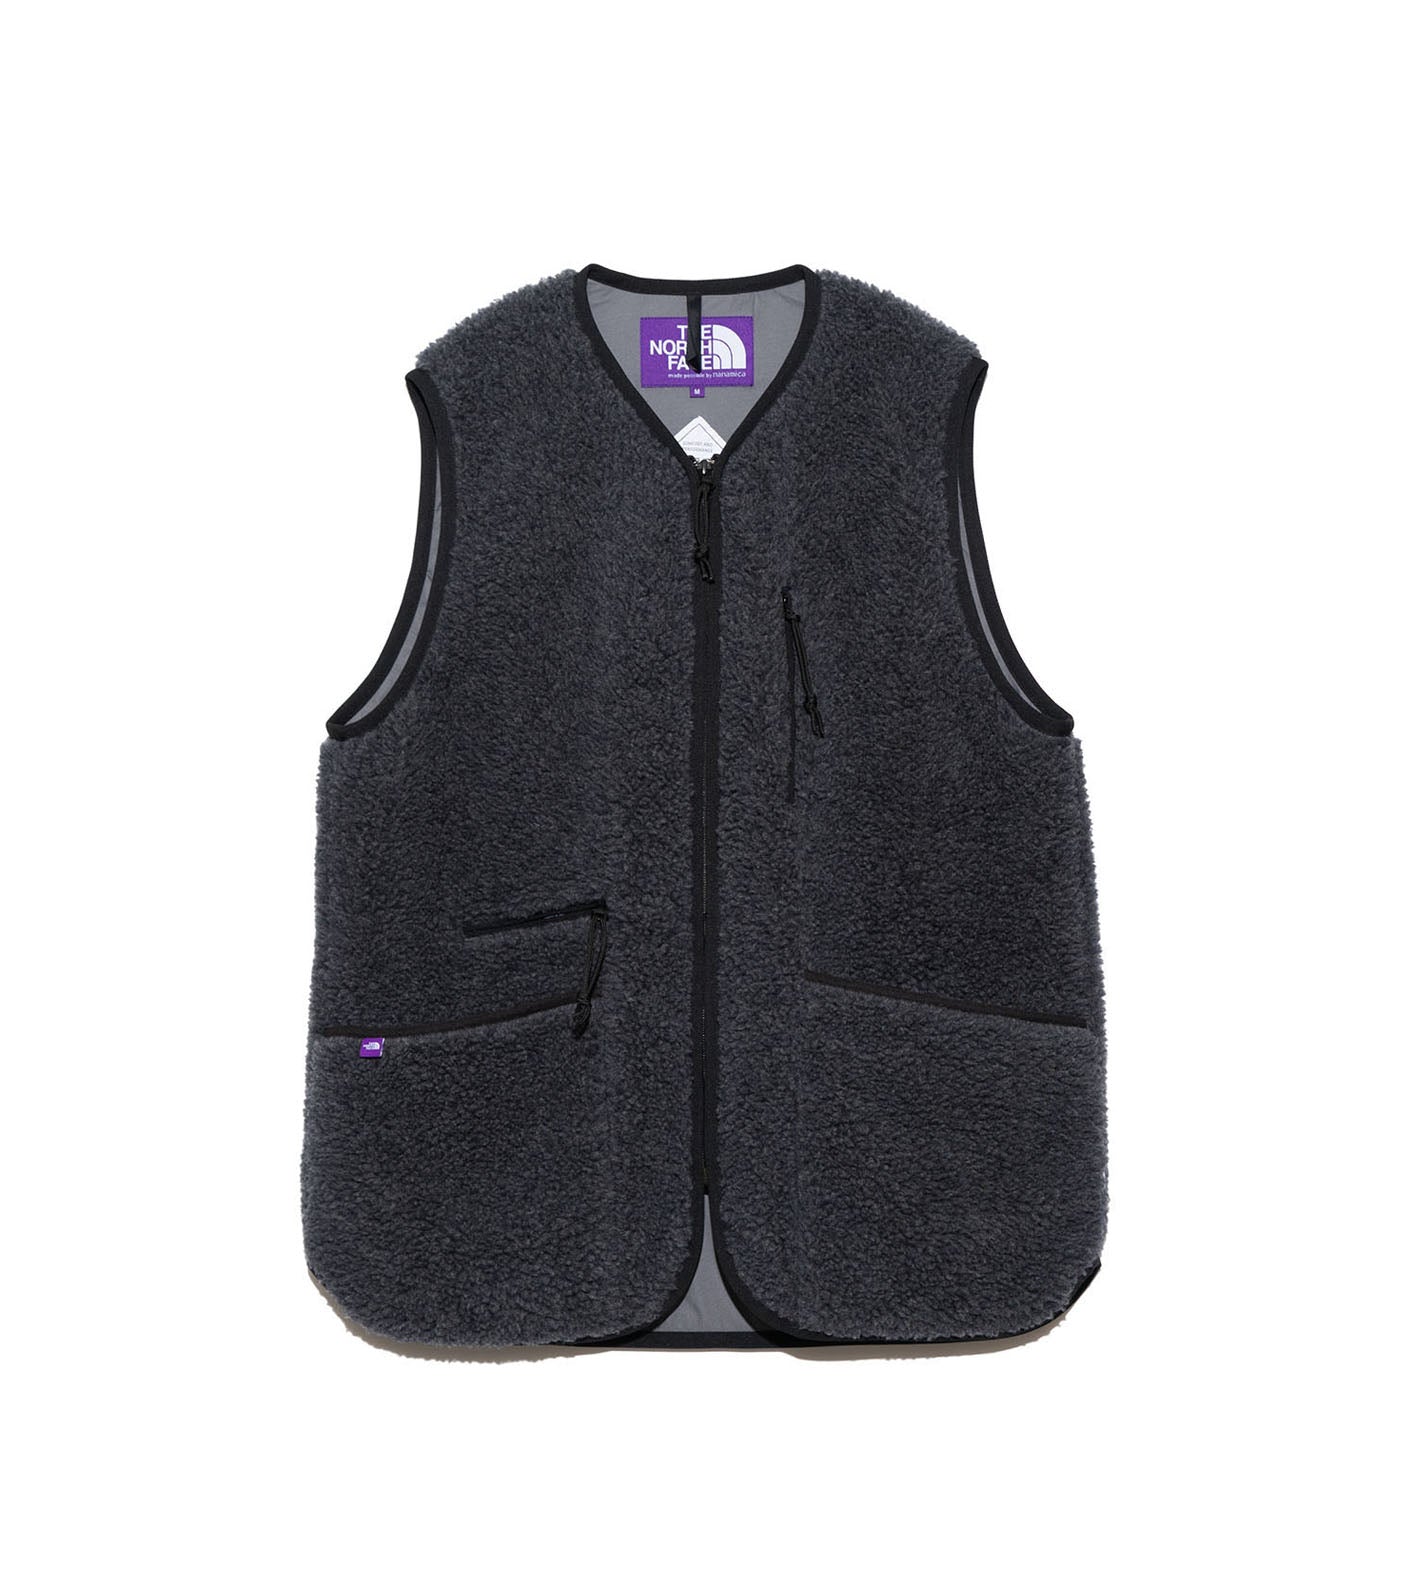 THE NORTH FACE PURPLE LABEL Wool Boa WINDSTOPPER Field Vest